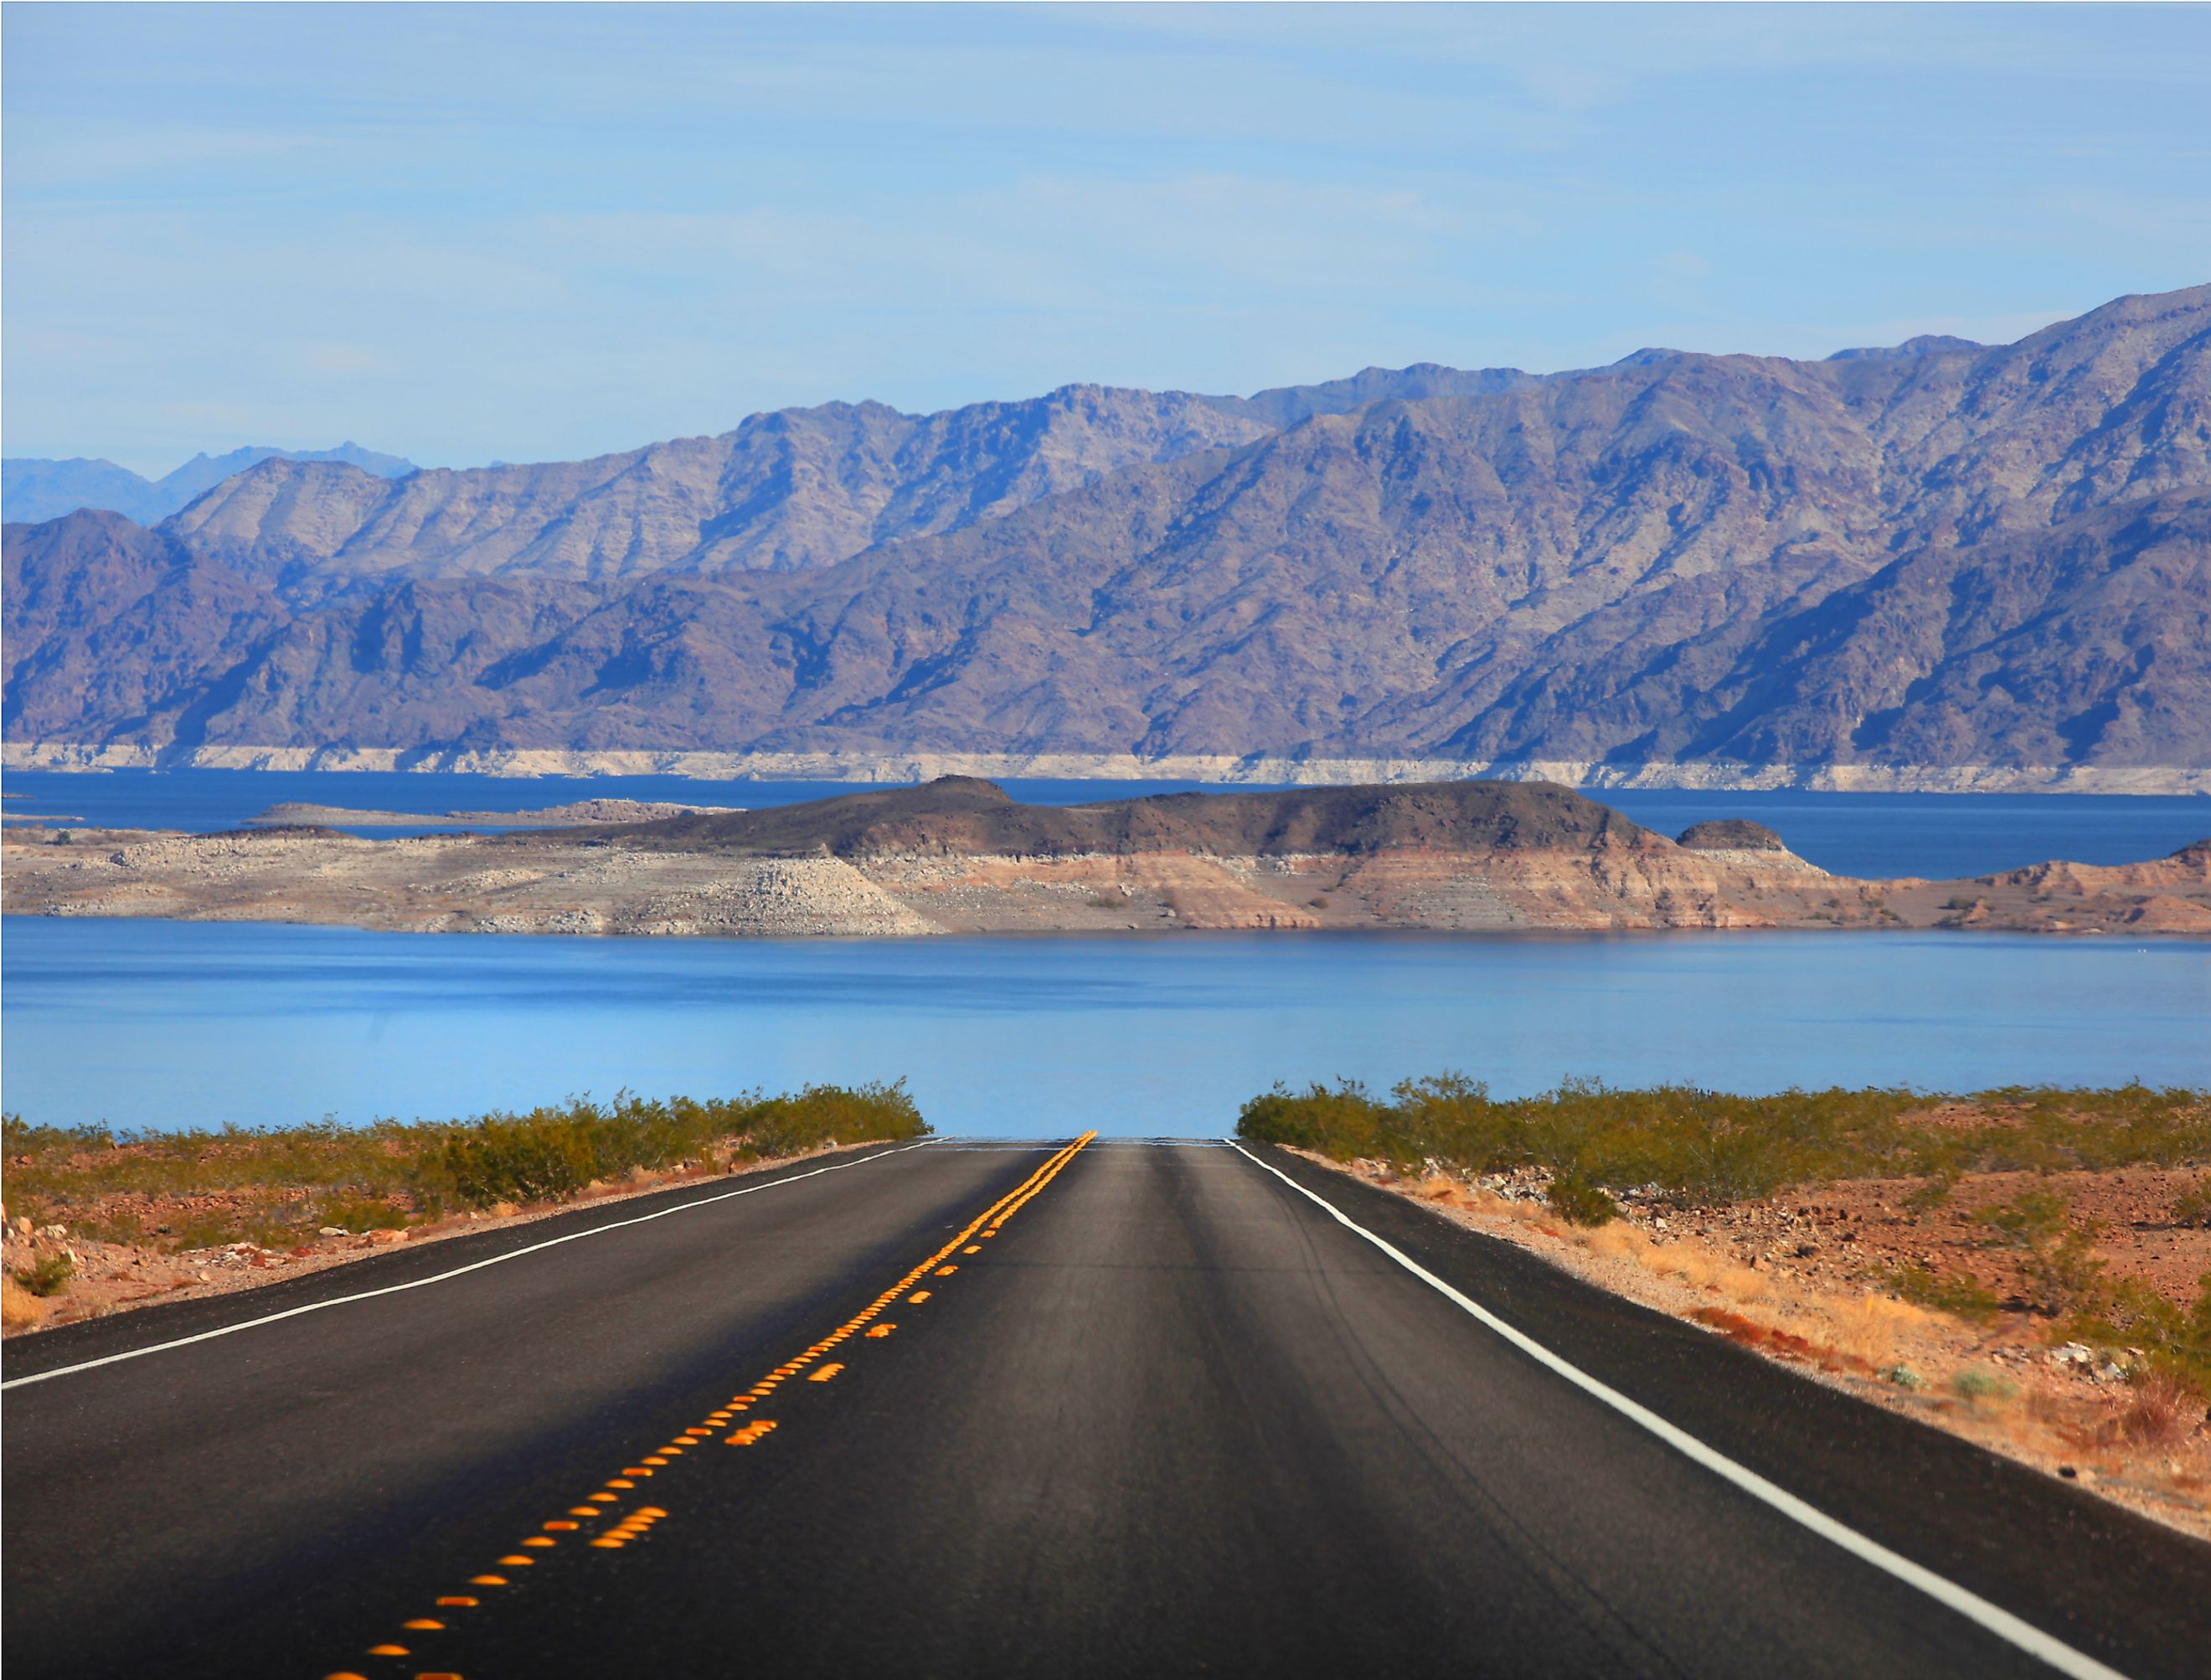 Lake Mead Scenic Drive- Image Credit SNEHIT PHOTO via Shutterstock